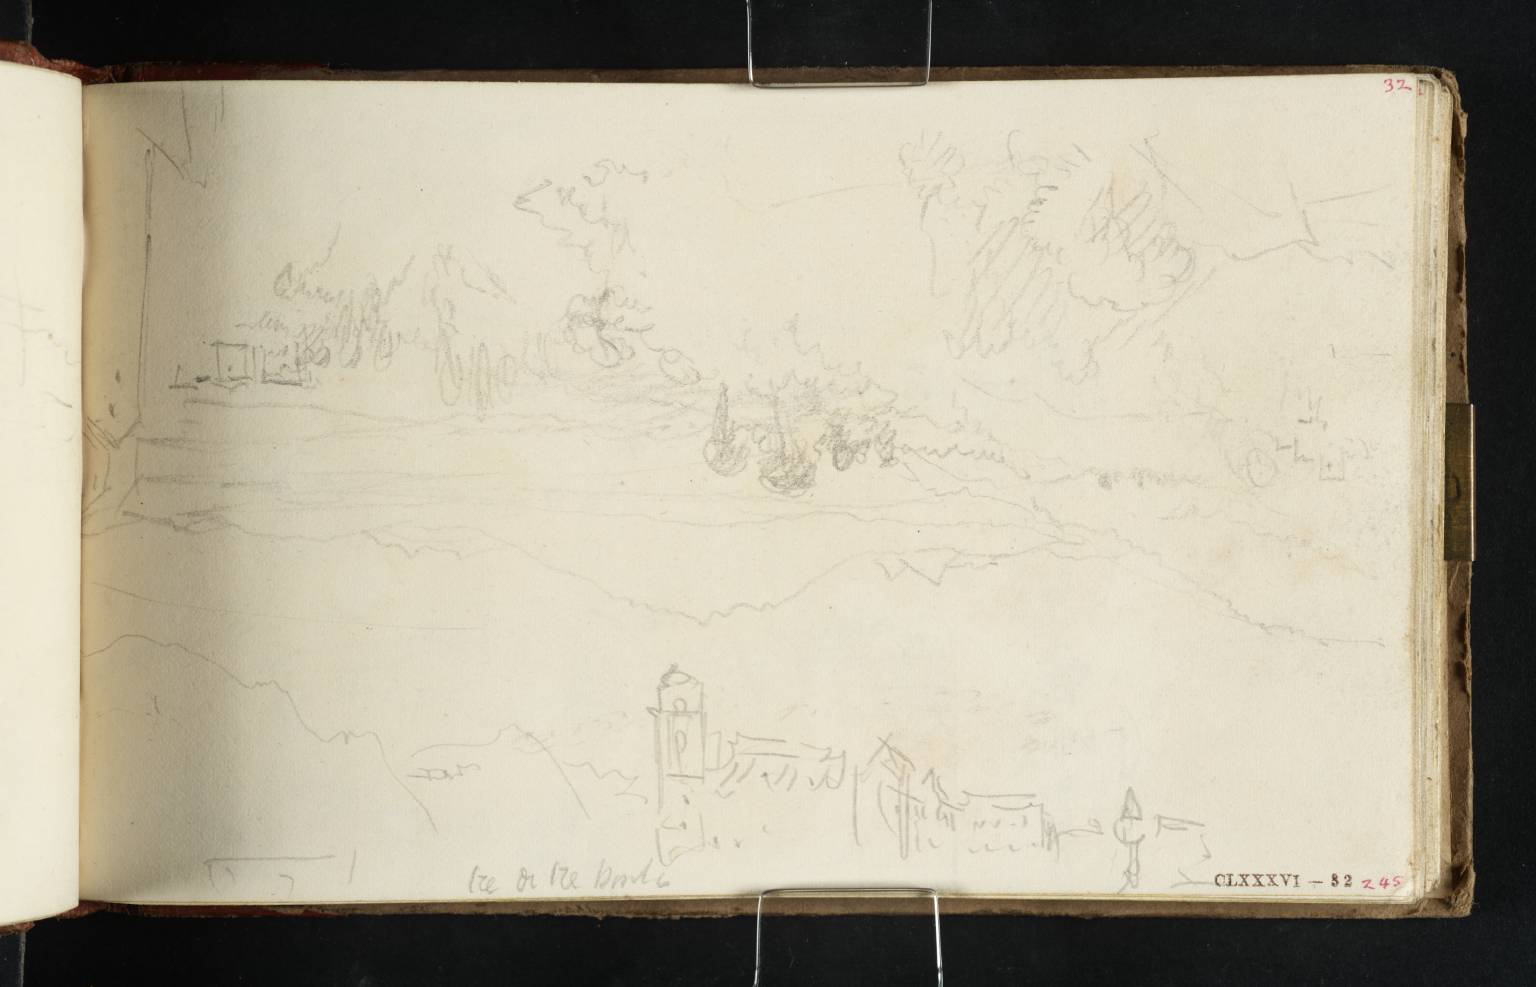 Treponti [Turner] 1819 by Joseph Mallord William Turner 1775-1851